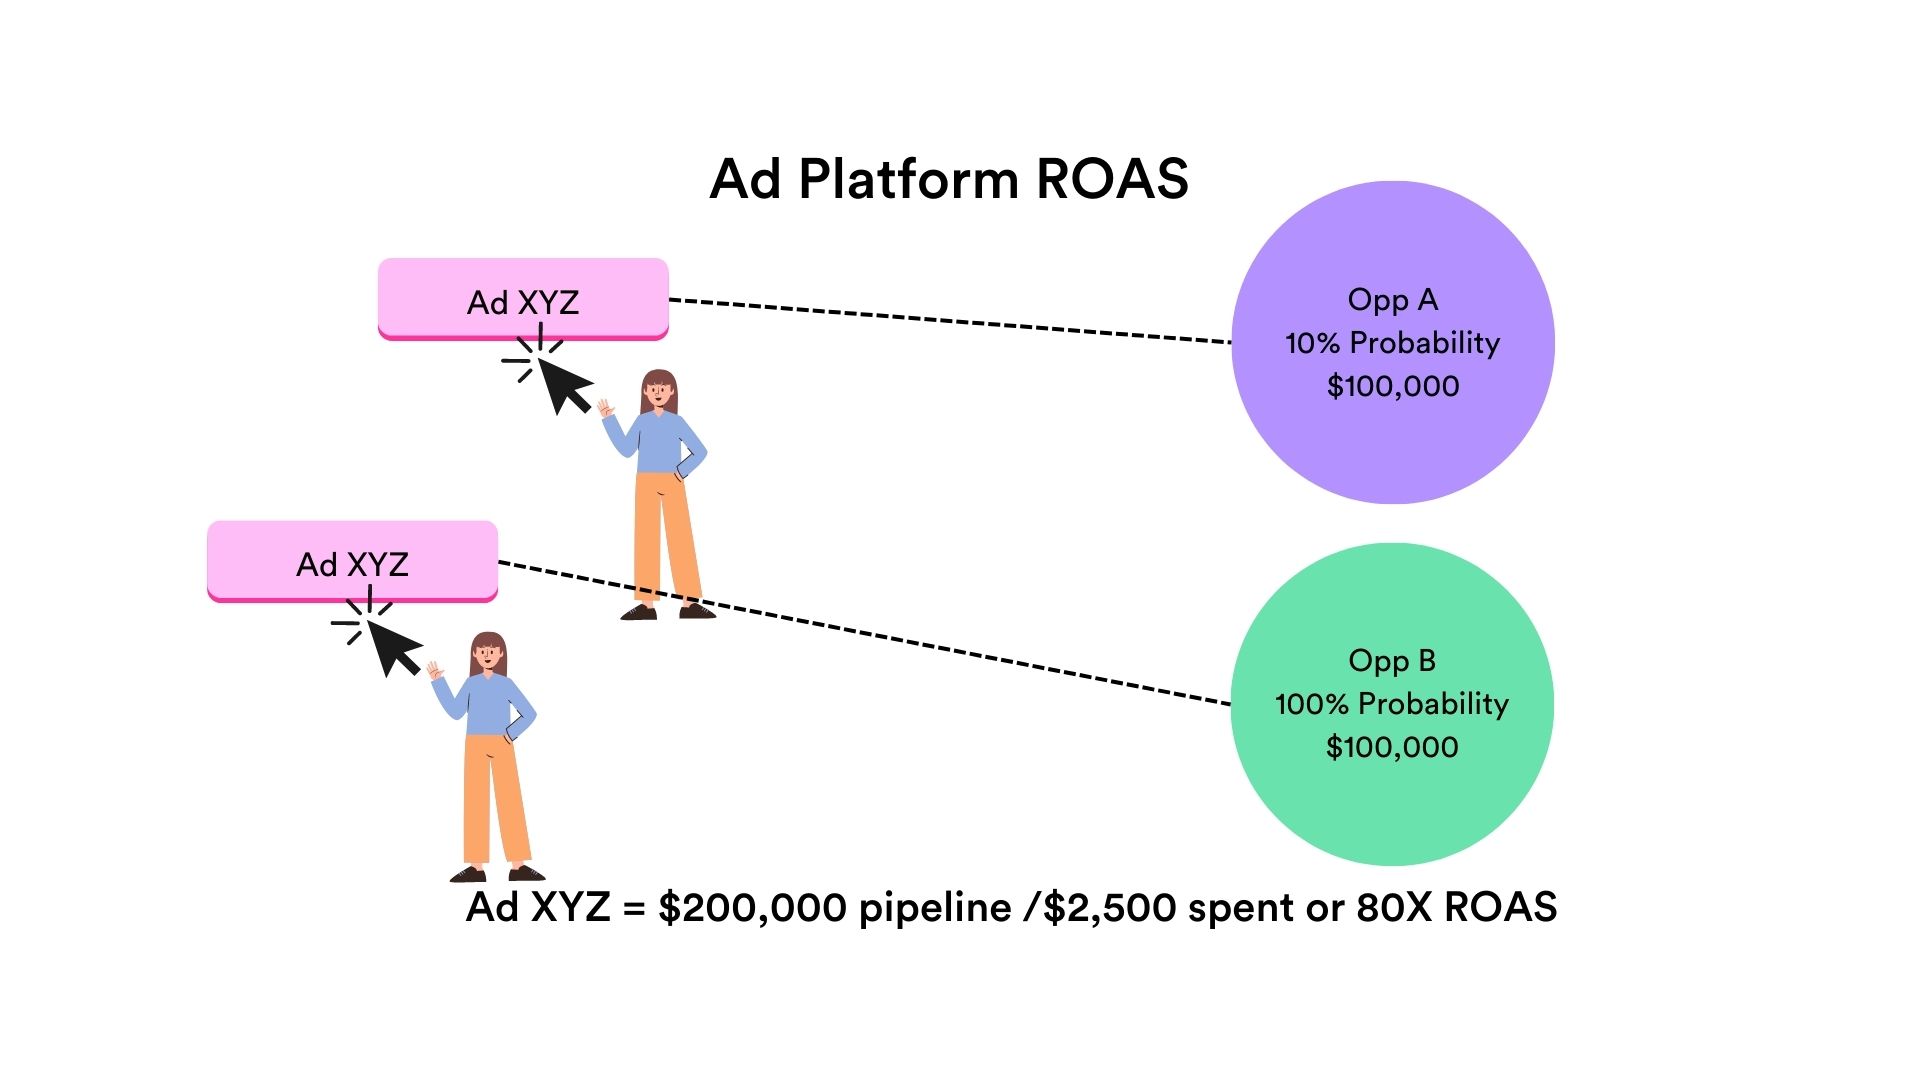 ad platform ROAS